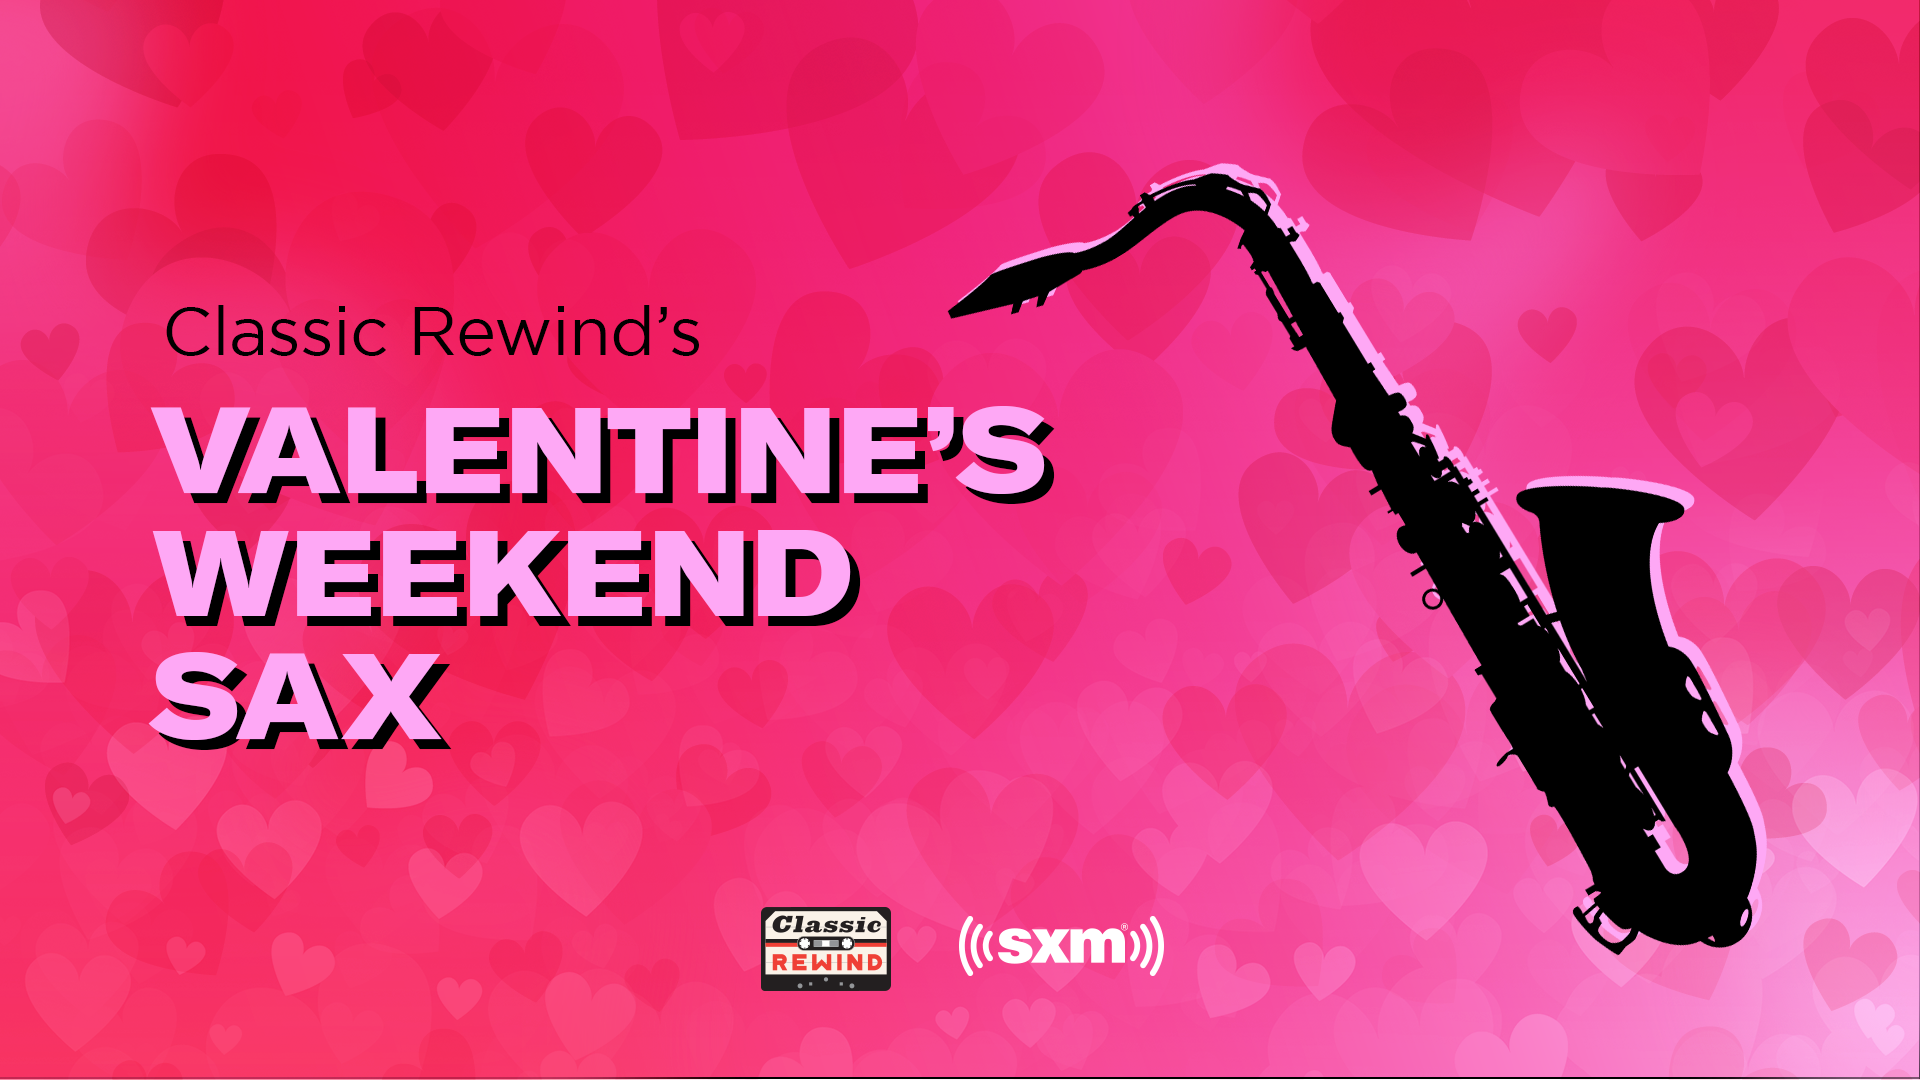 SiriusXM Classic Rewind Valentine's Weekend Sax